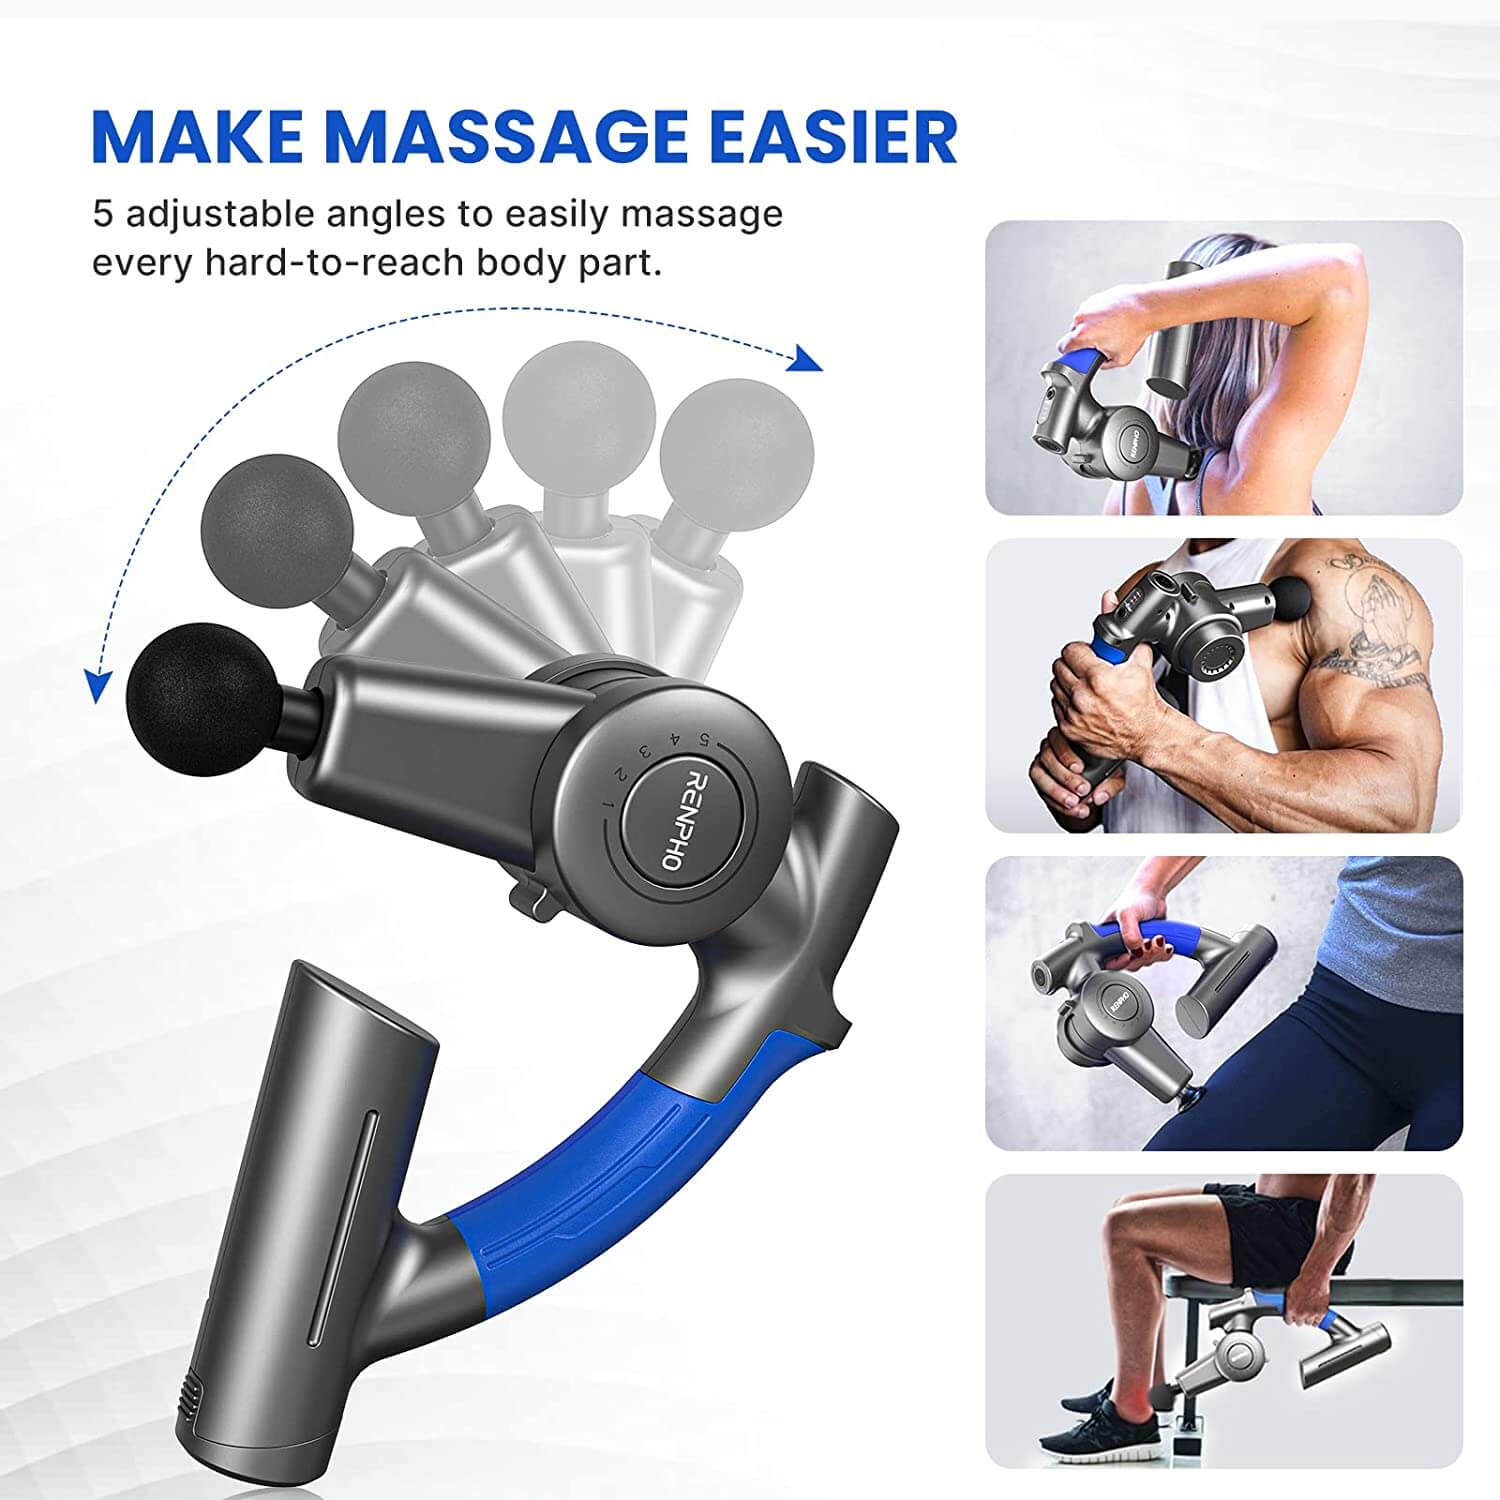 Pain relief using massage guns